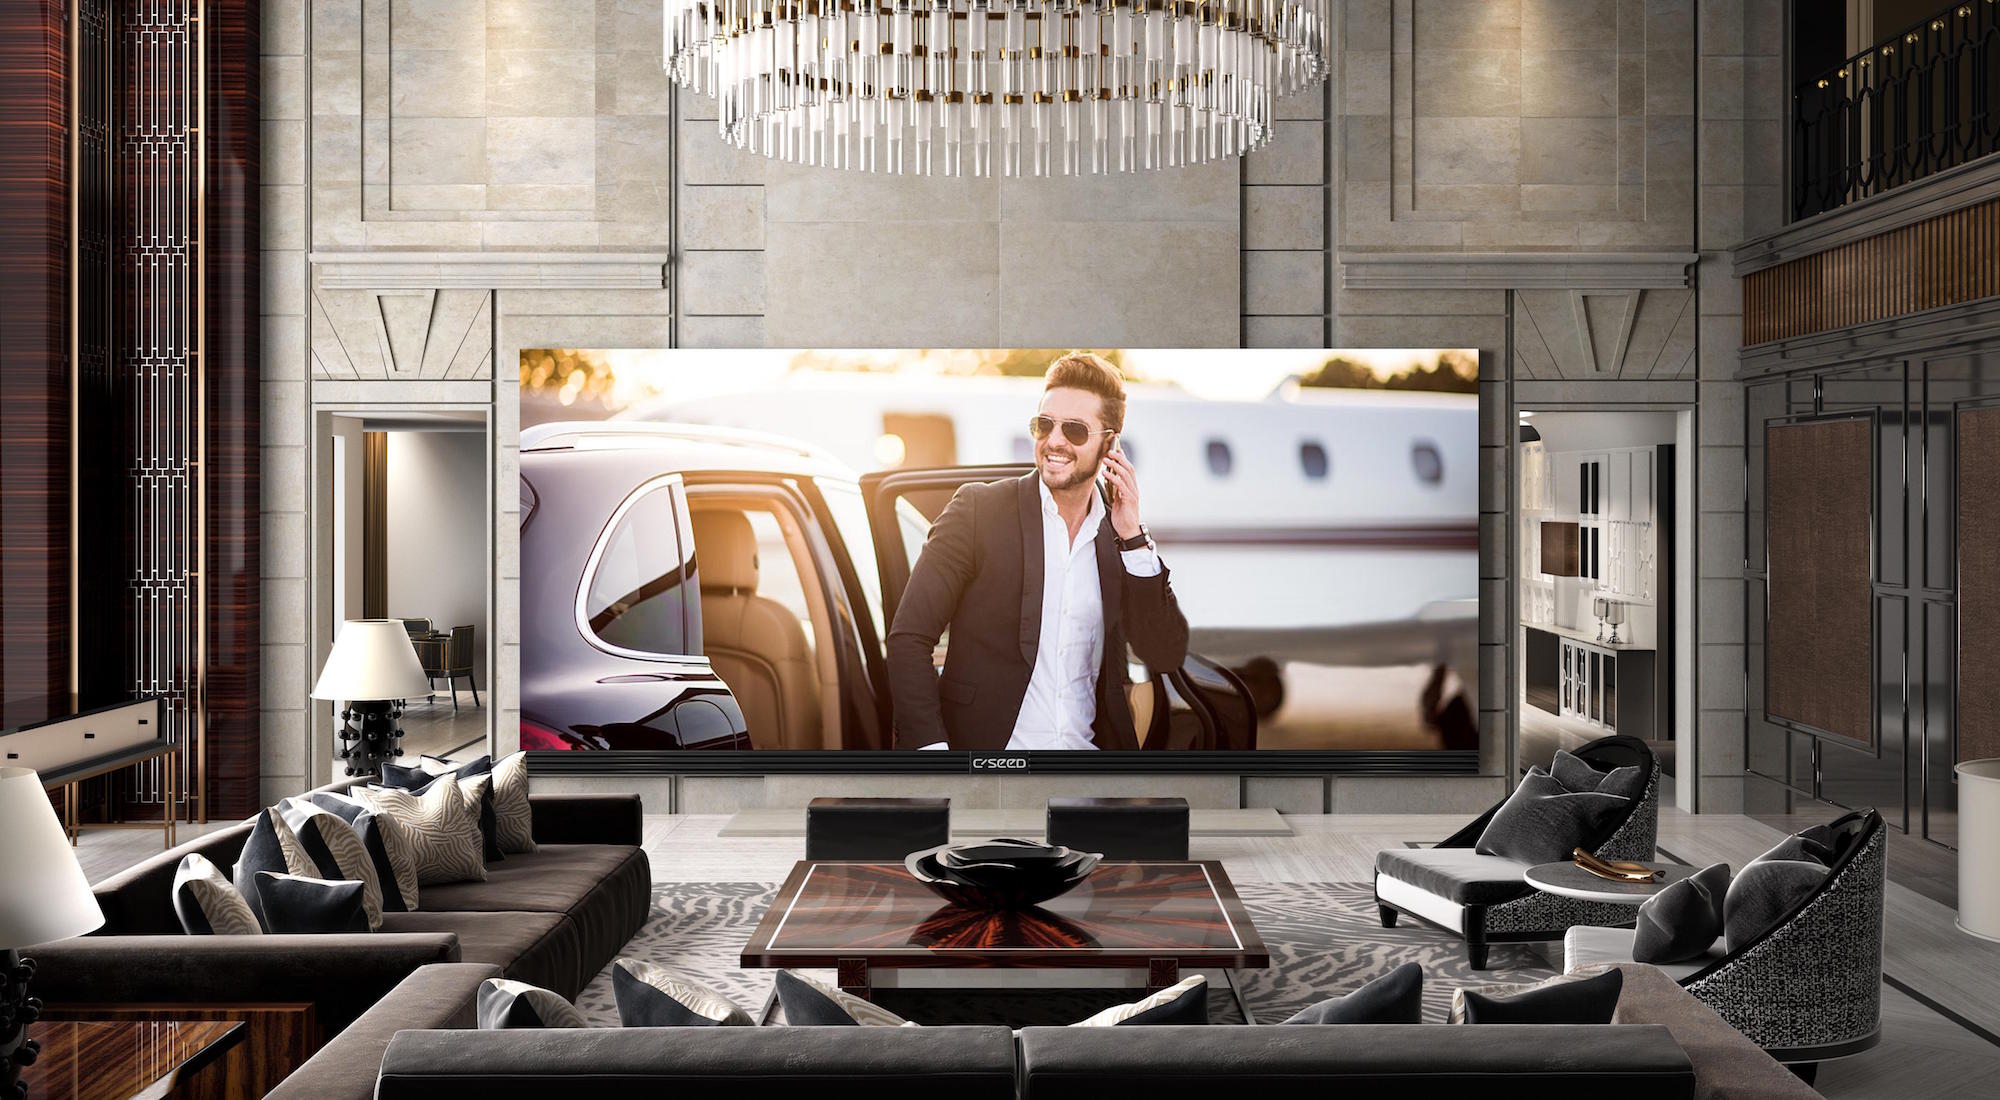 Der weltweit größte 4K Widescreen TV: C SEED 262 1